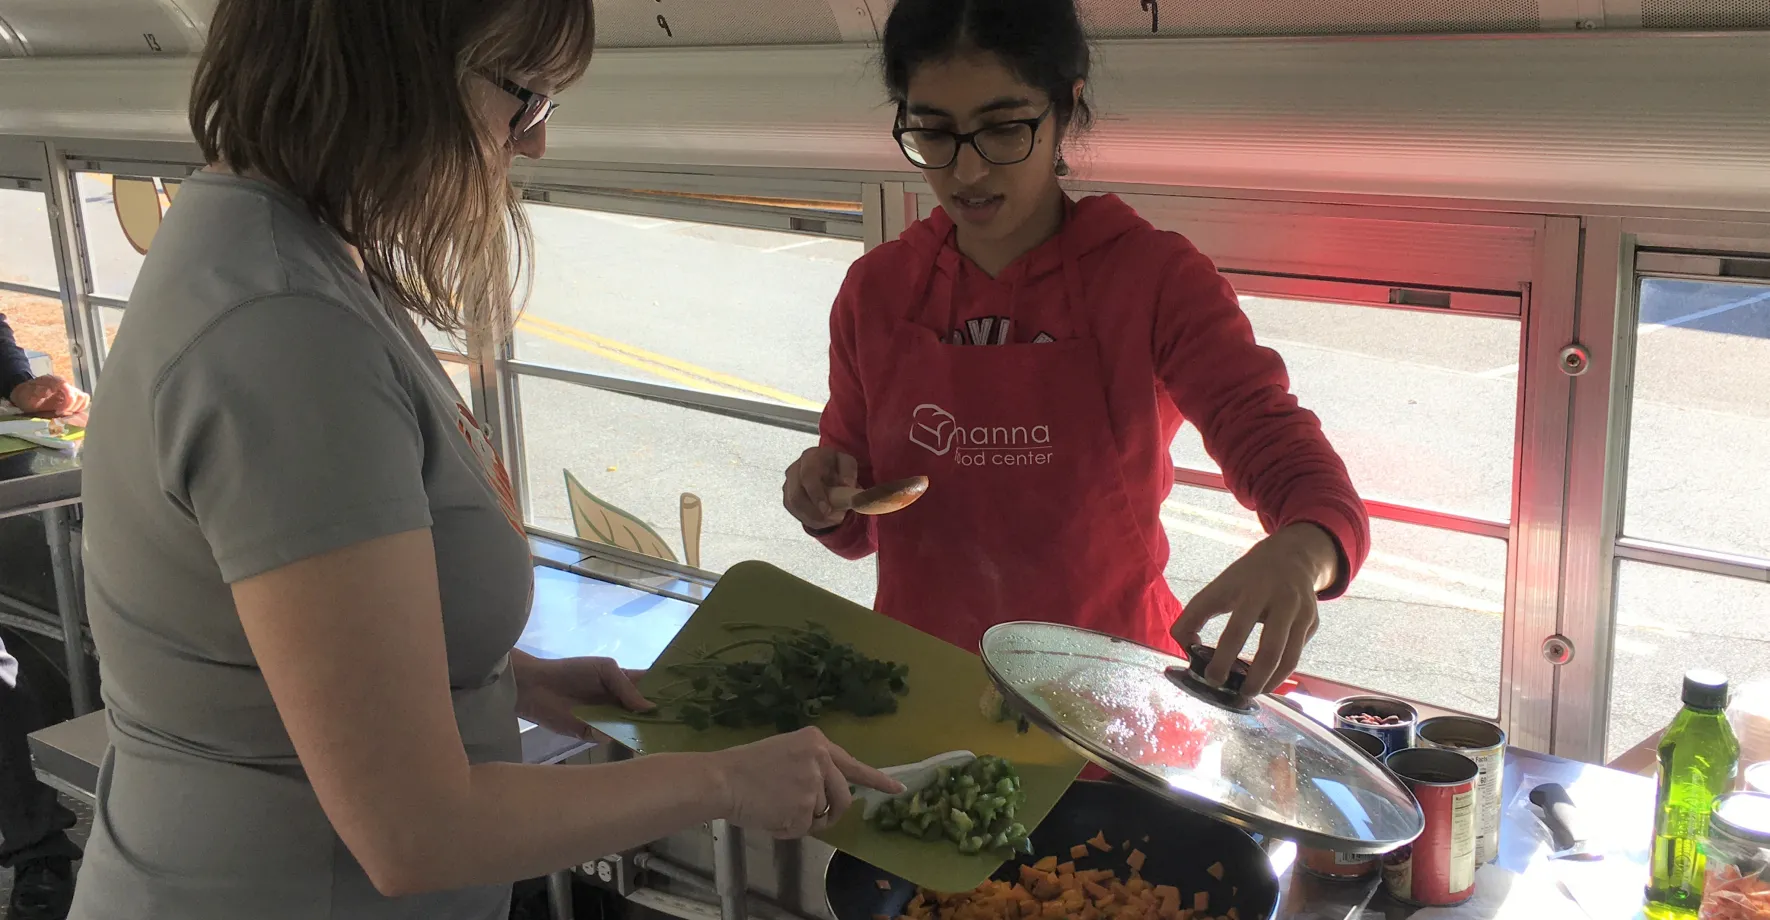 Women serving food in bus